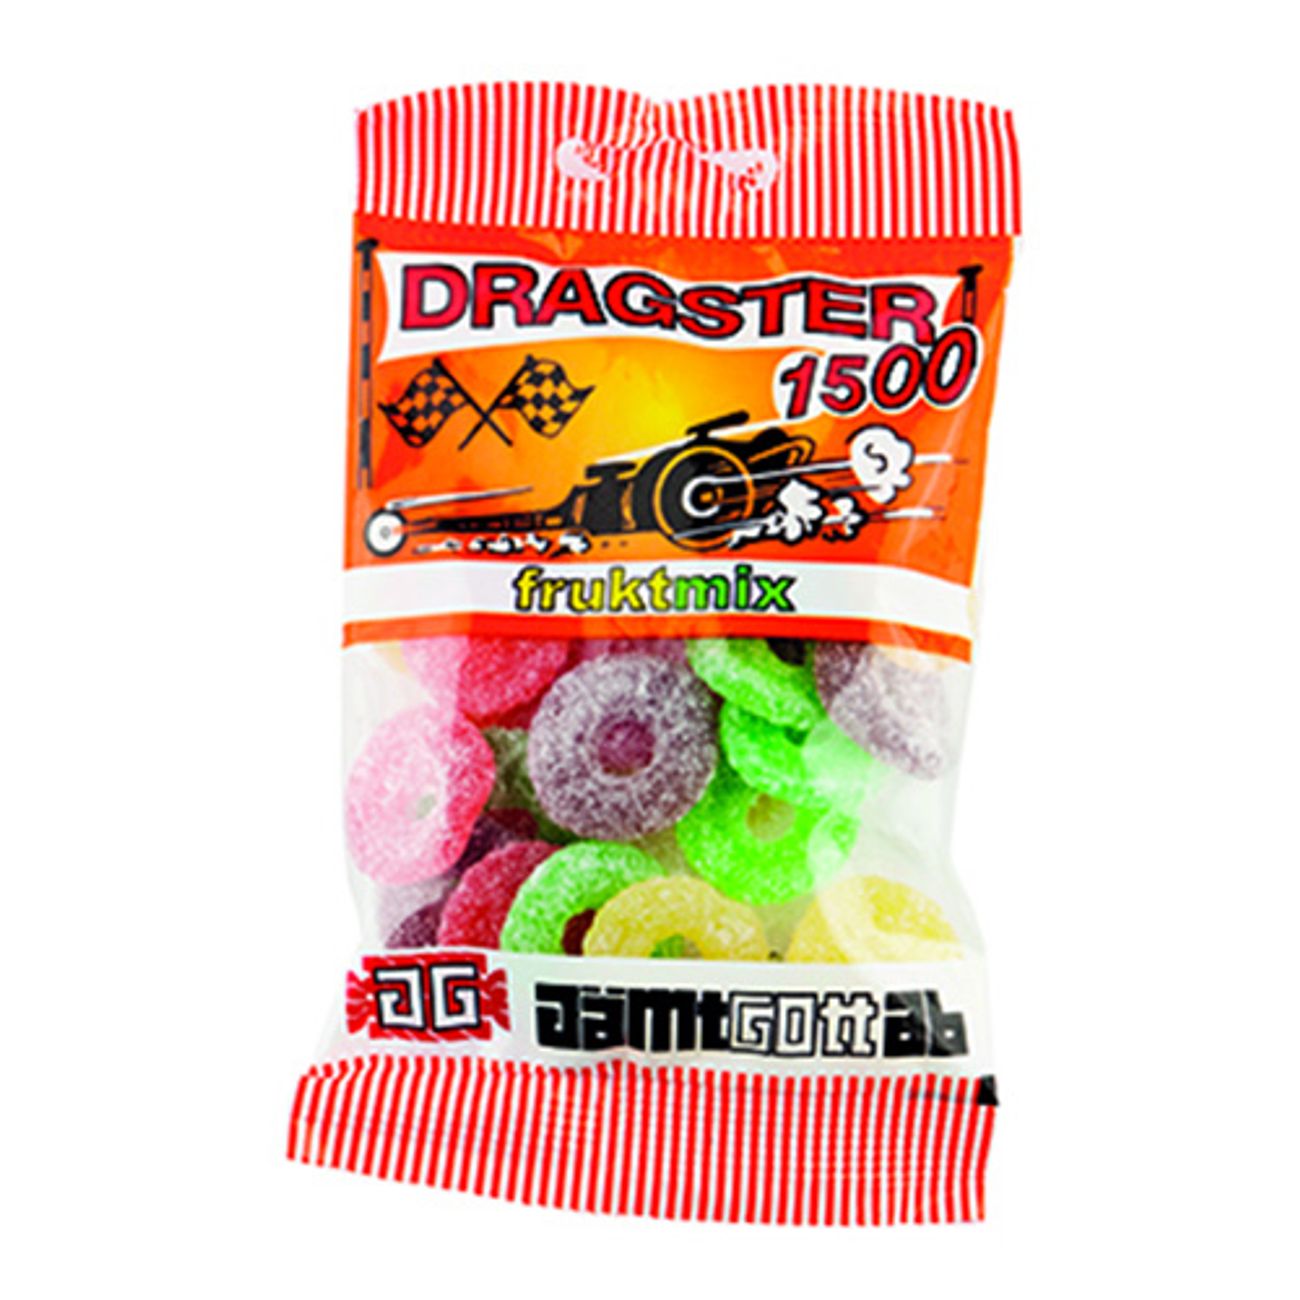 dragster-fruktmix-1